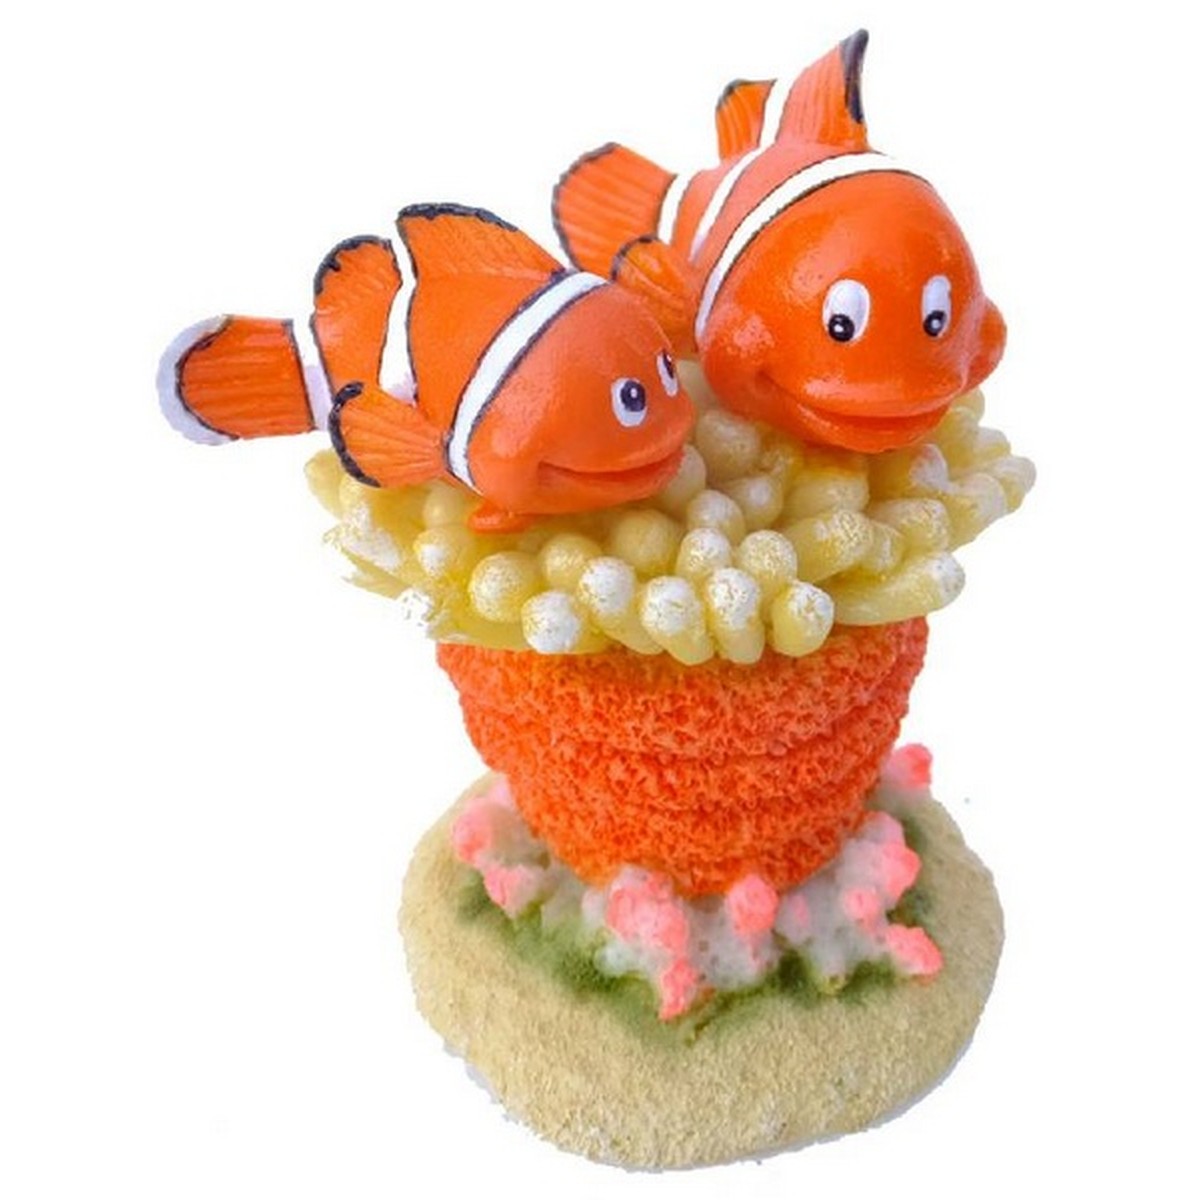   Décor Clown fish - 5 ca.7x6.5x9 cm  7x6.5x9cm